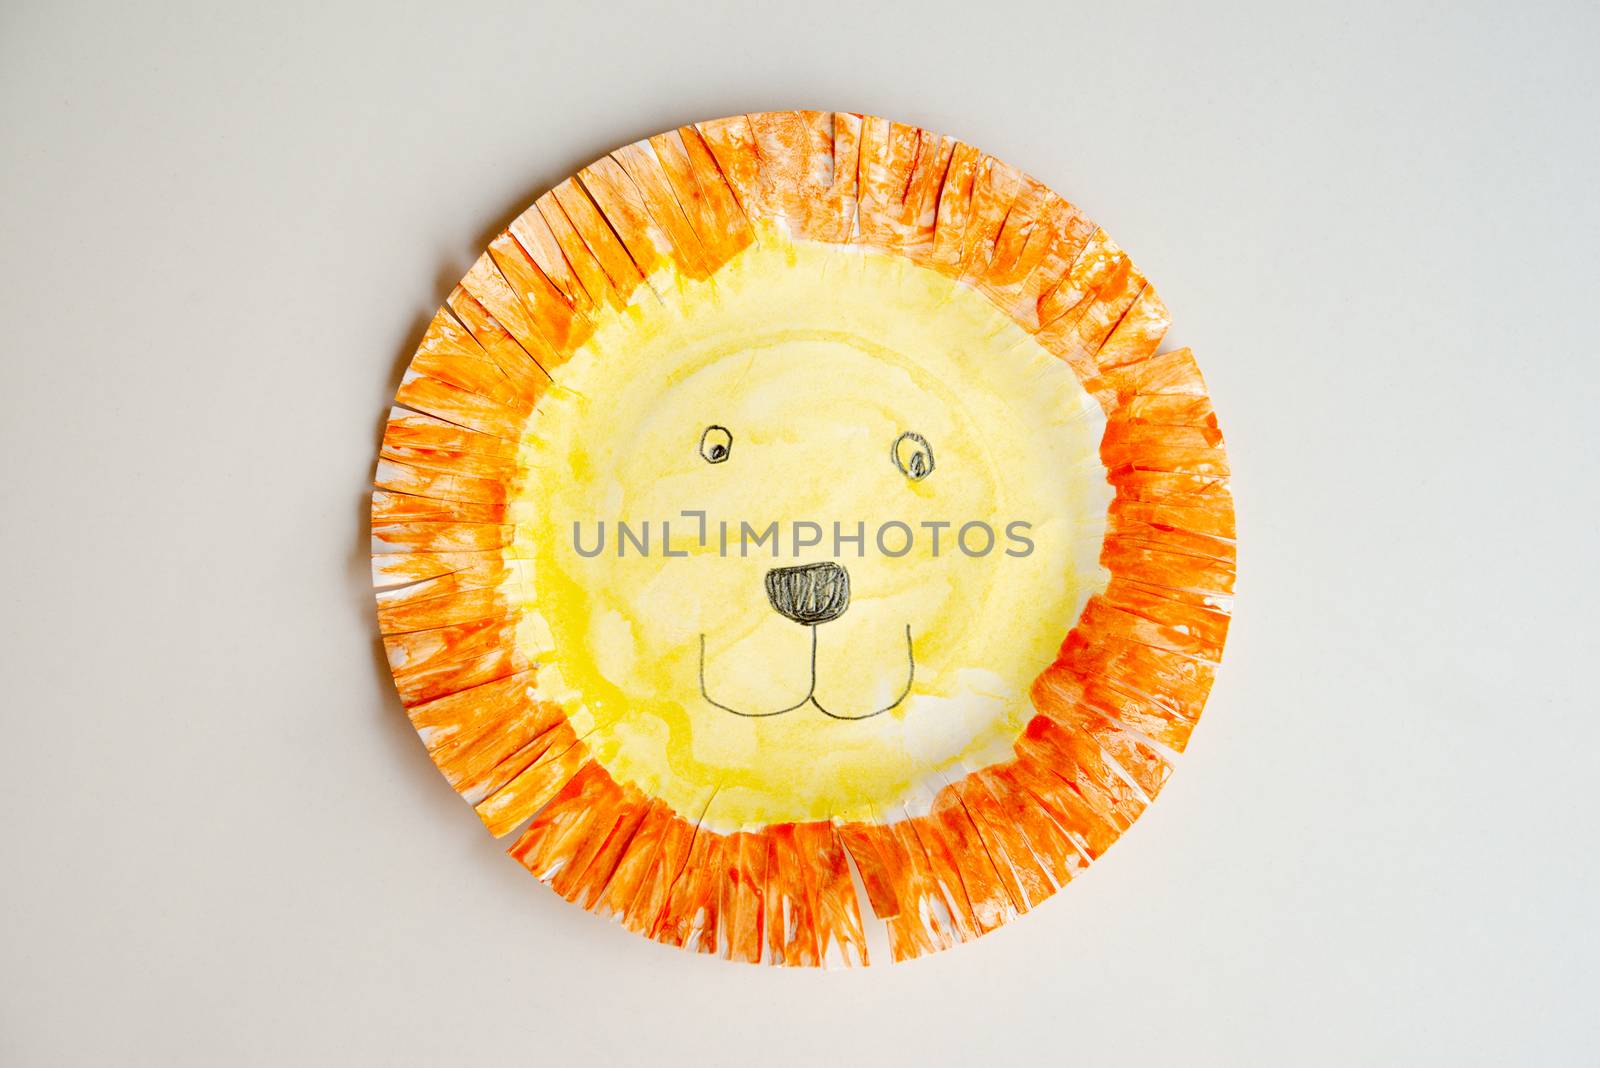 Child artwork, handmade lion mask on plain background.